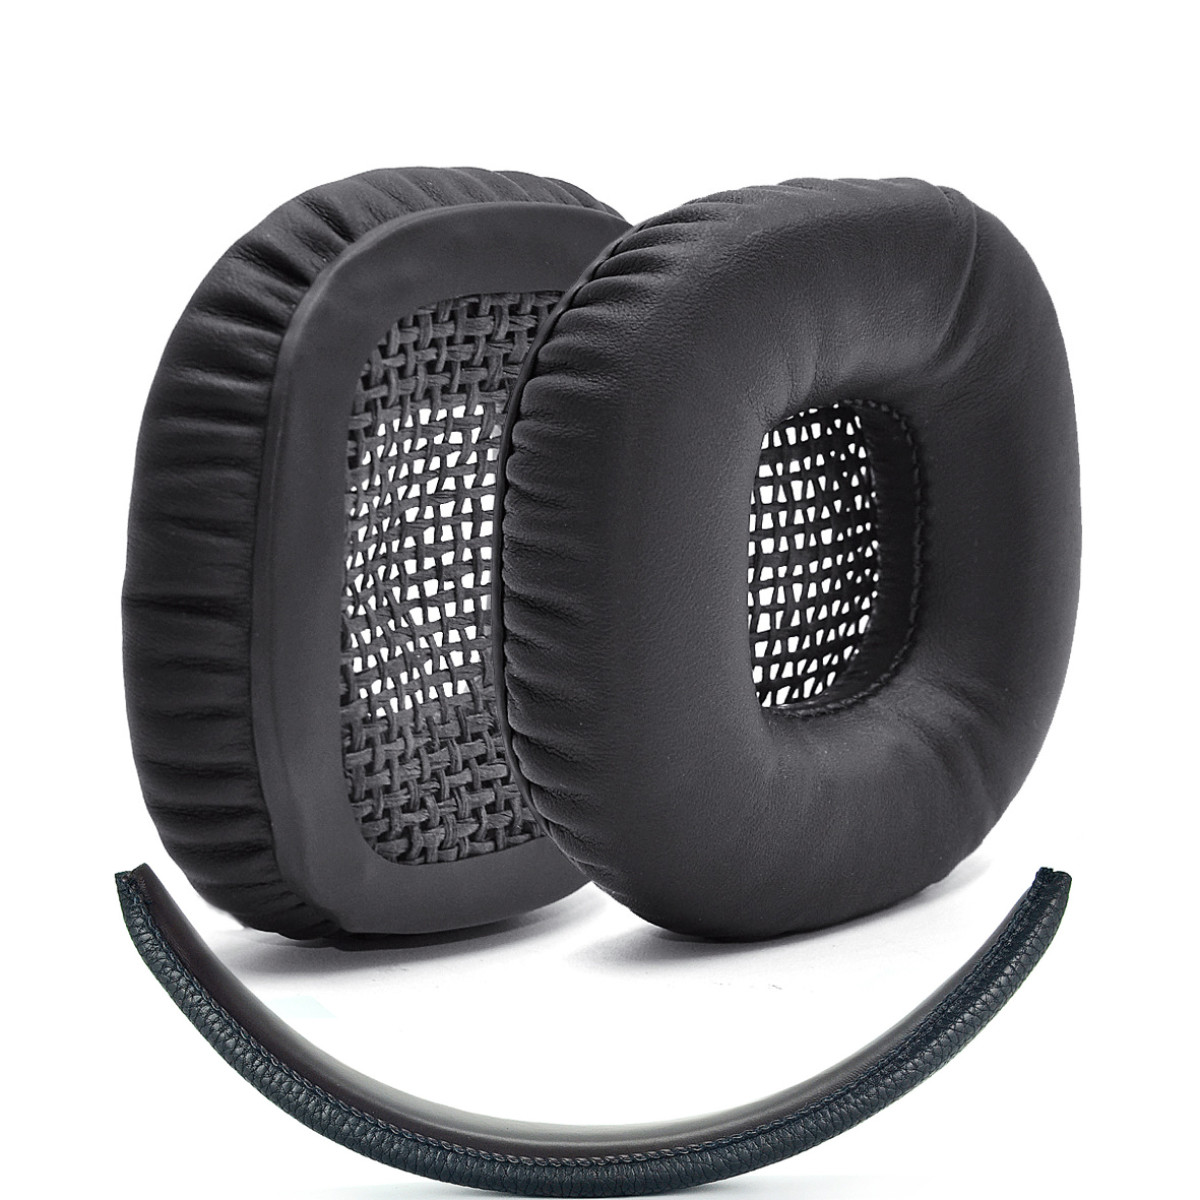 Schwarz für Kopfhörer-Ohrpolster passend für: Kopfbügel aus Paar Marshall und INF PU-Leder Ohrpolster 1 Marshall Full Ma Cover